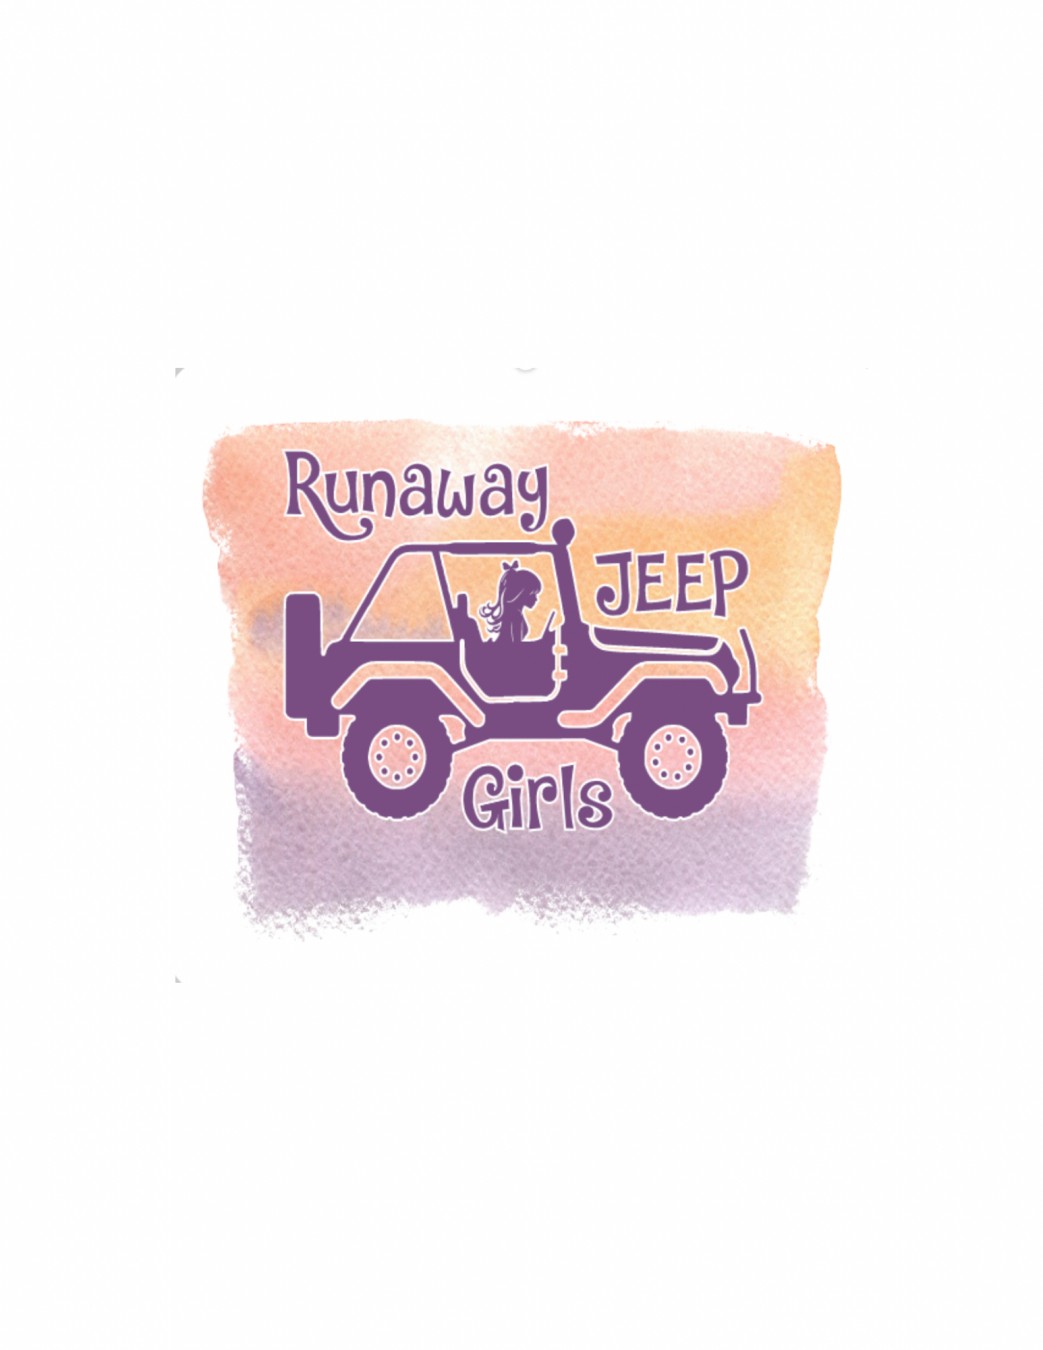 Runaway Jeep Girls